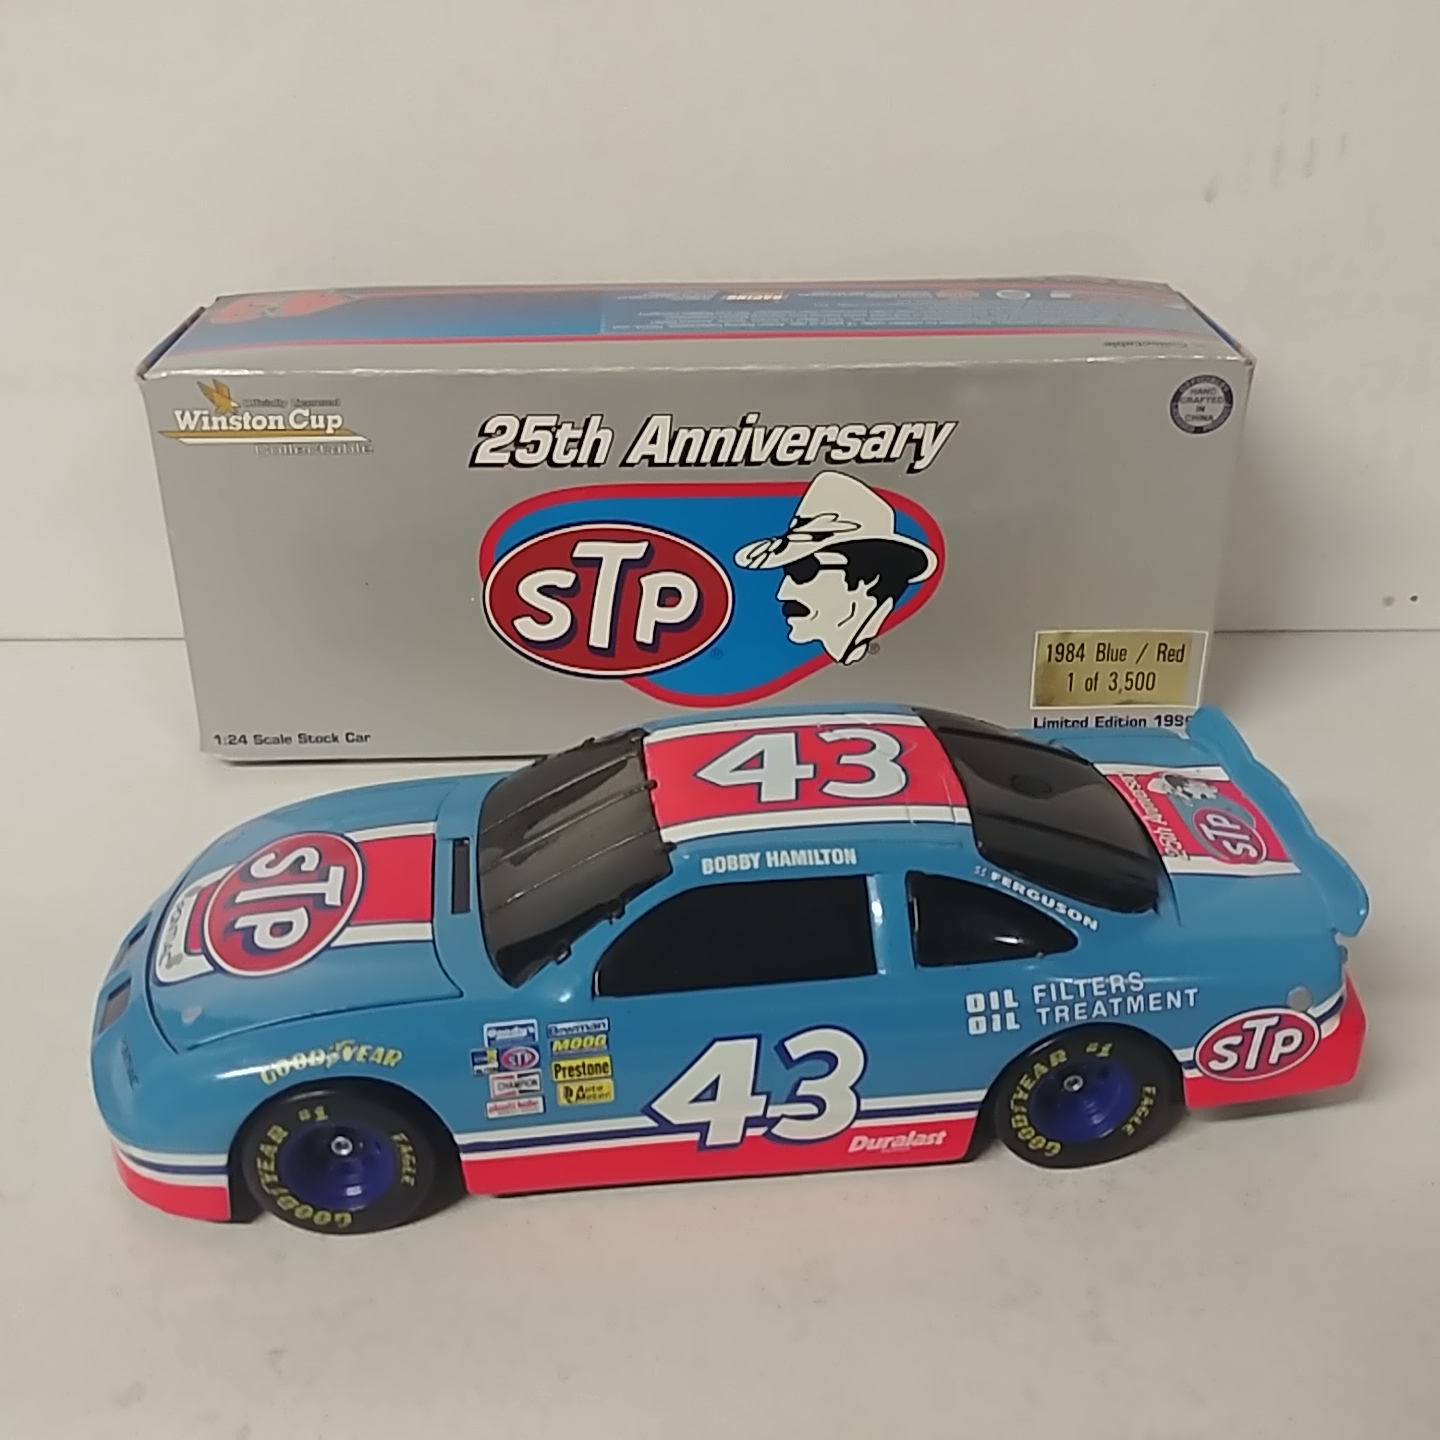 1996 Bobby Hamilton 1/24th STP "Petty 1984 Blue/Red" b/w car